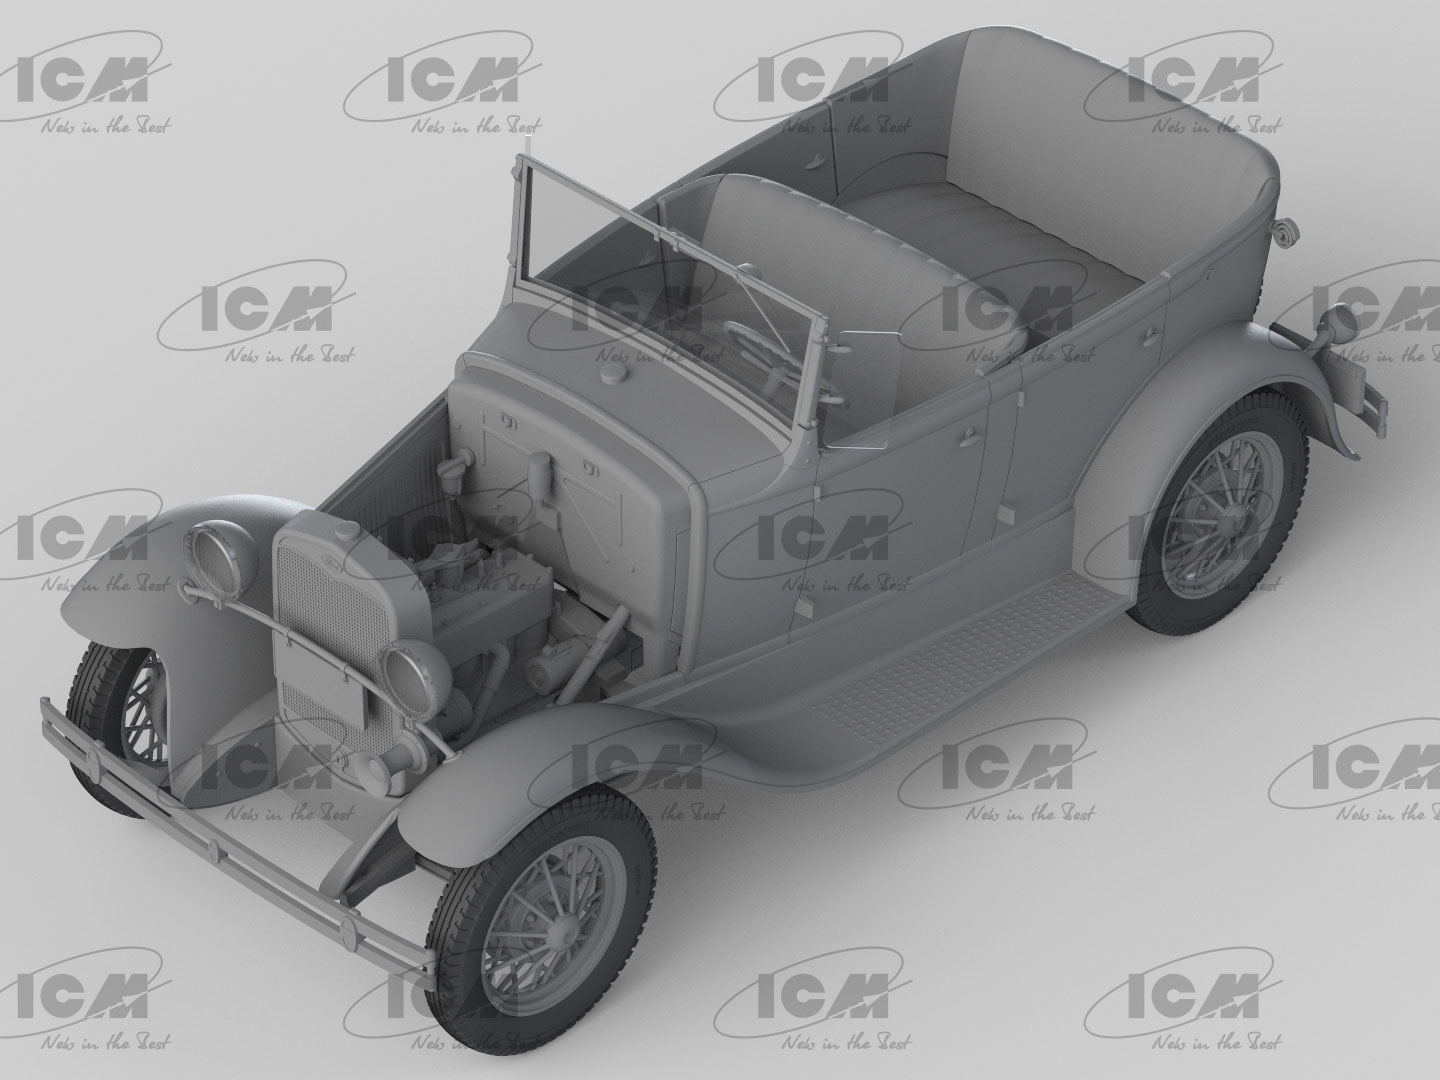 ICM 1/24 Model A Standard Phaeton Soft Top (1930s) American Passenger Car # 24050